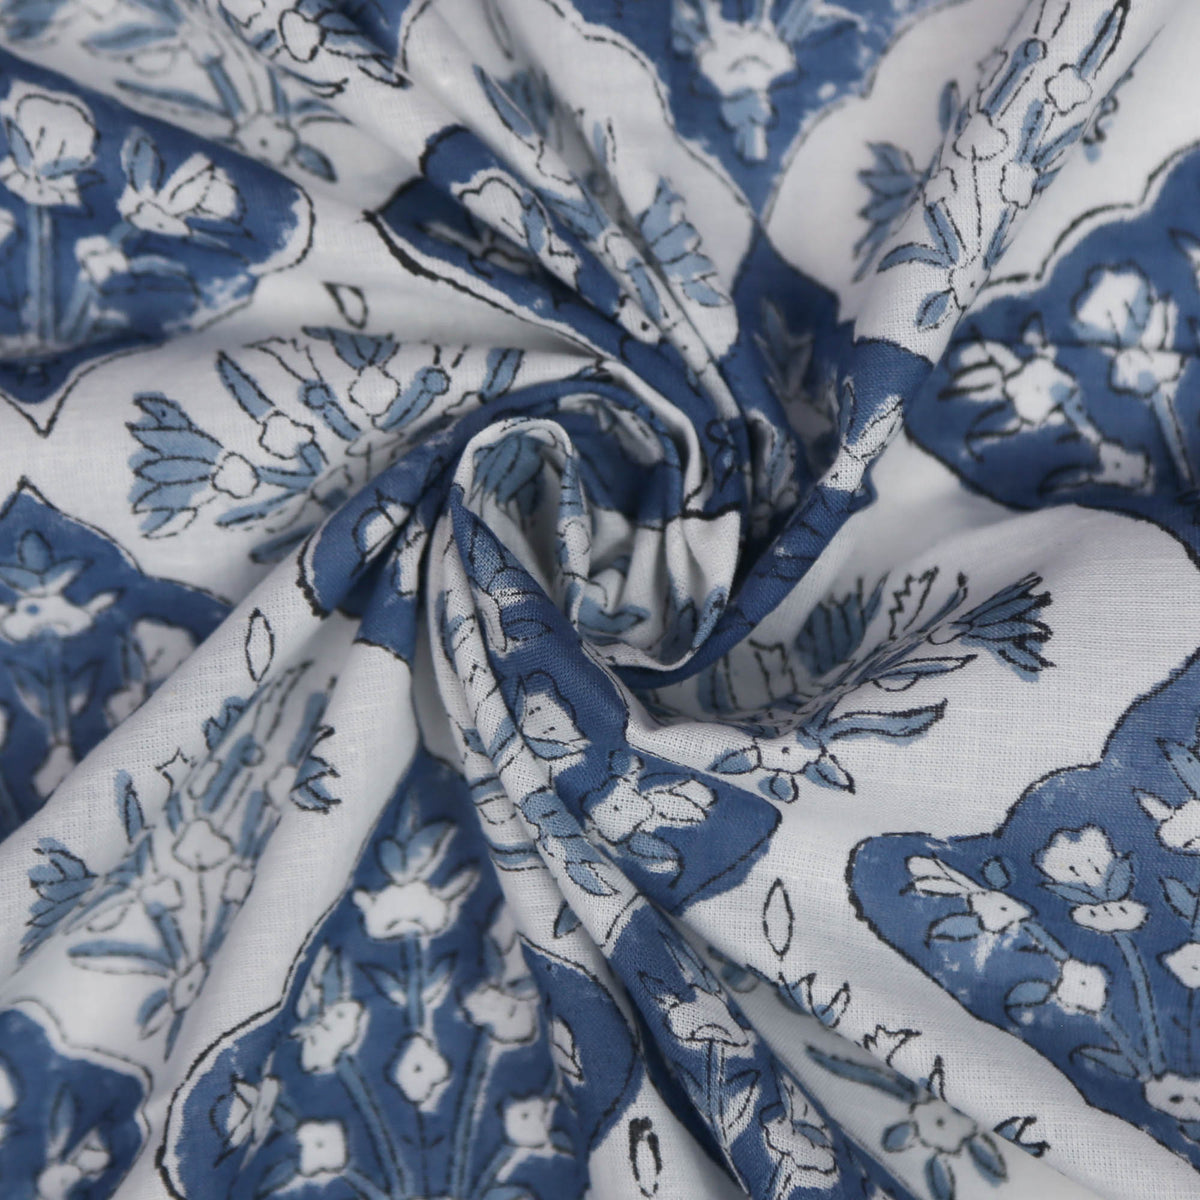 Block Print Fabric - Bluish Grey Floral( Design 499)